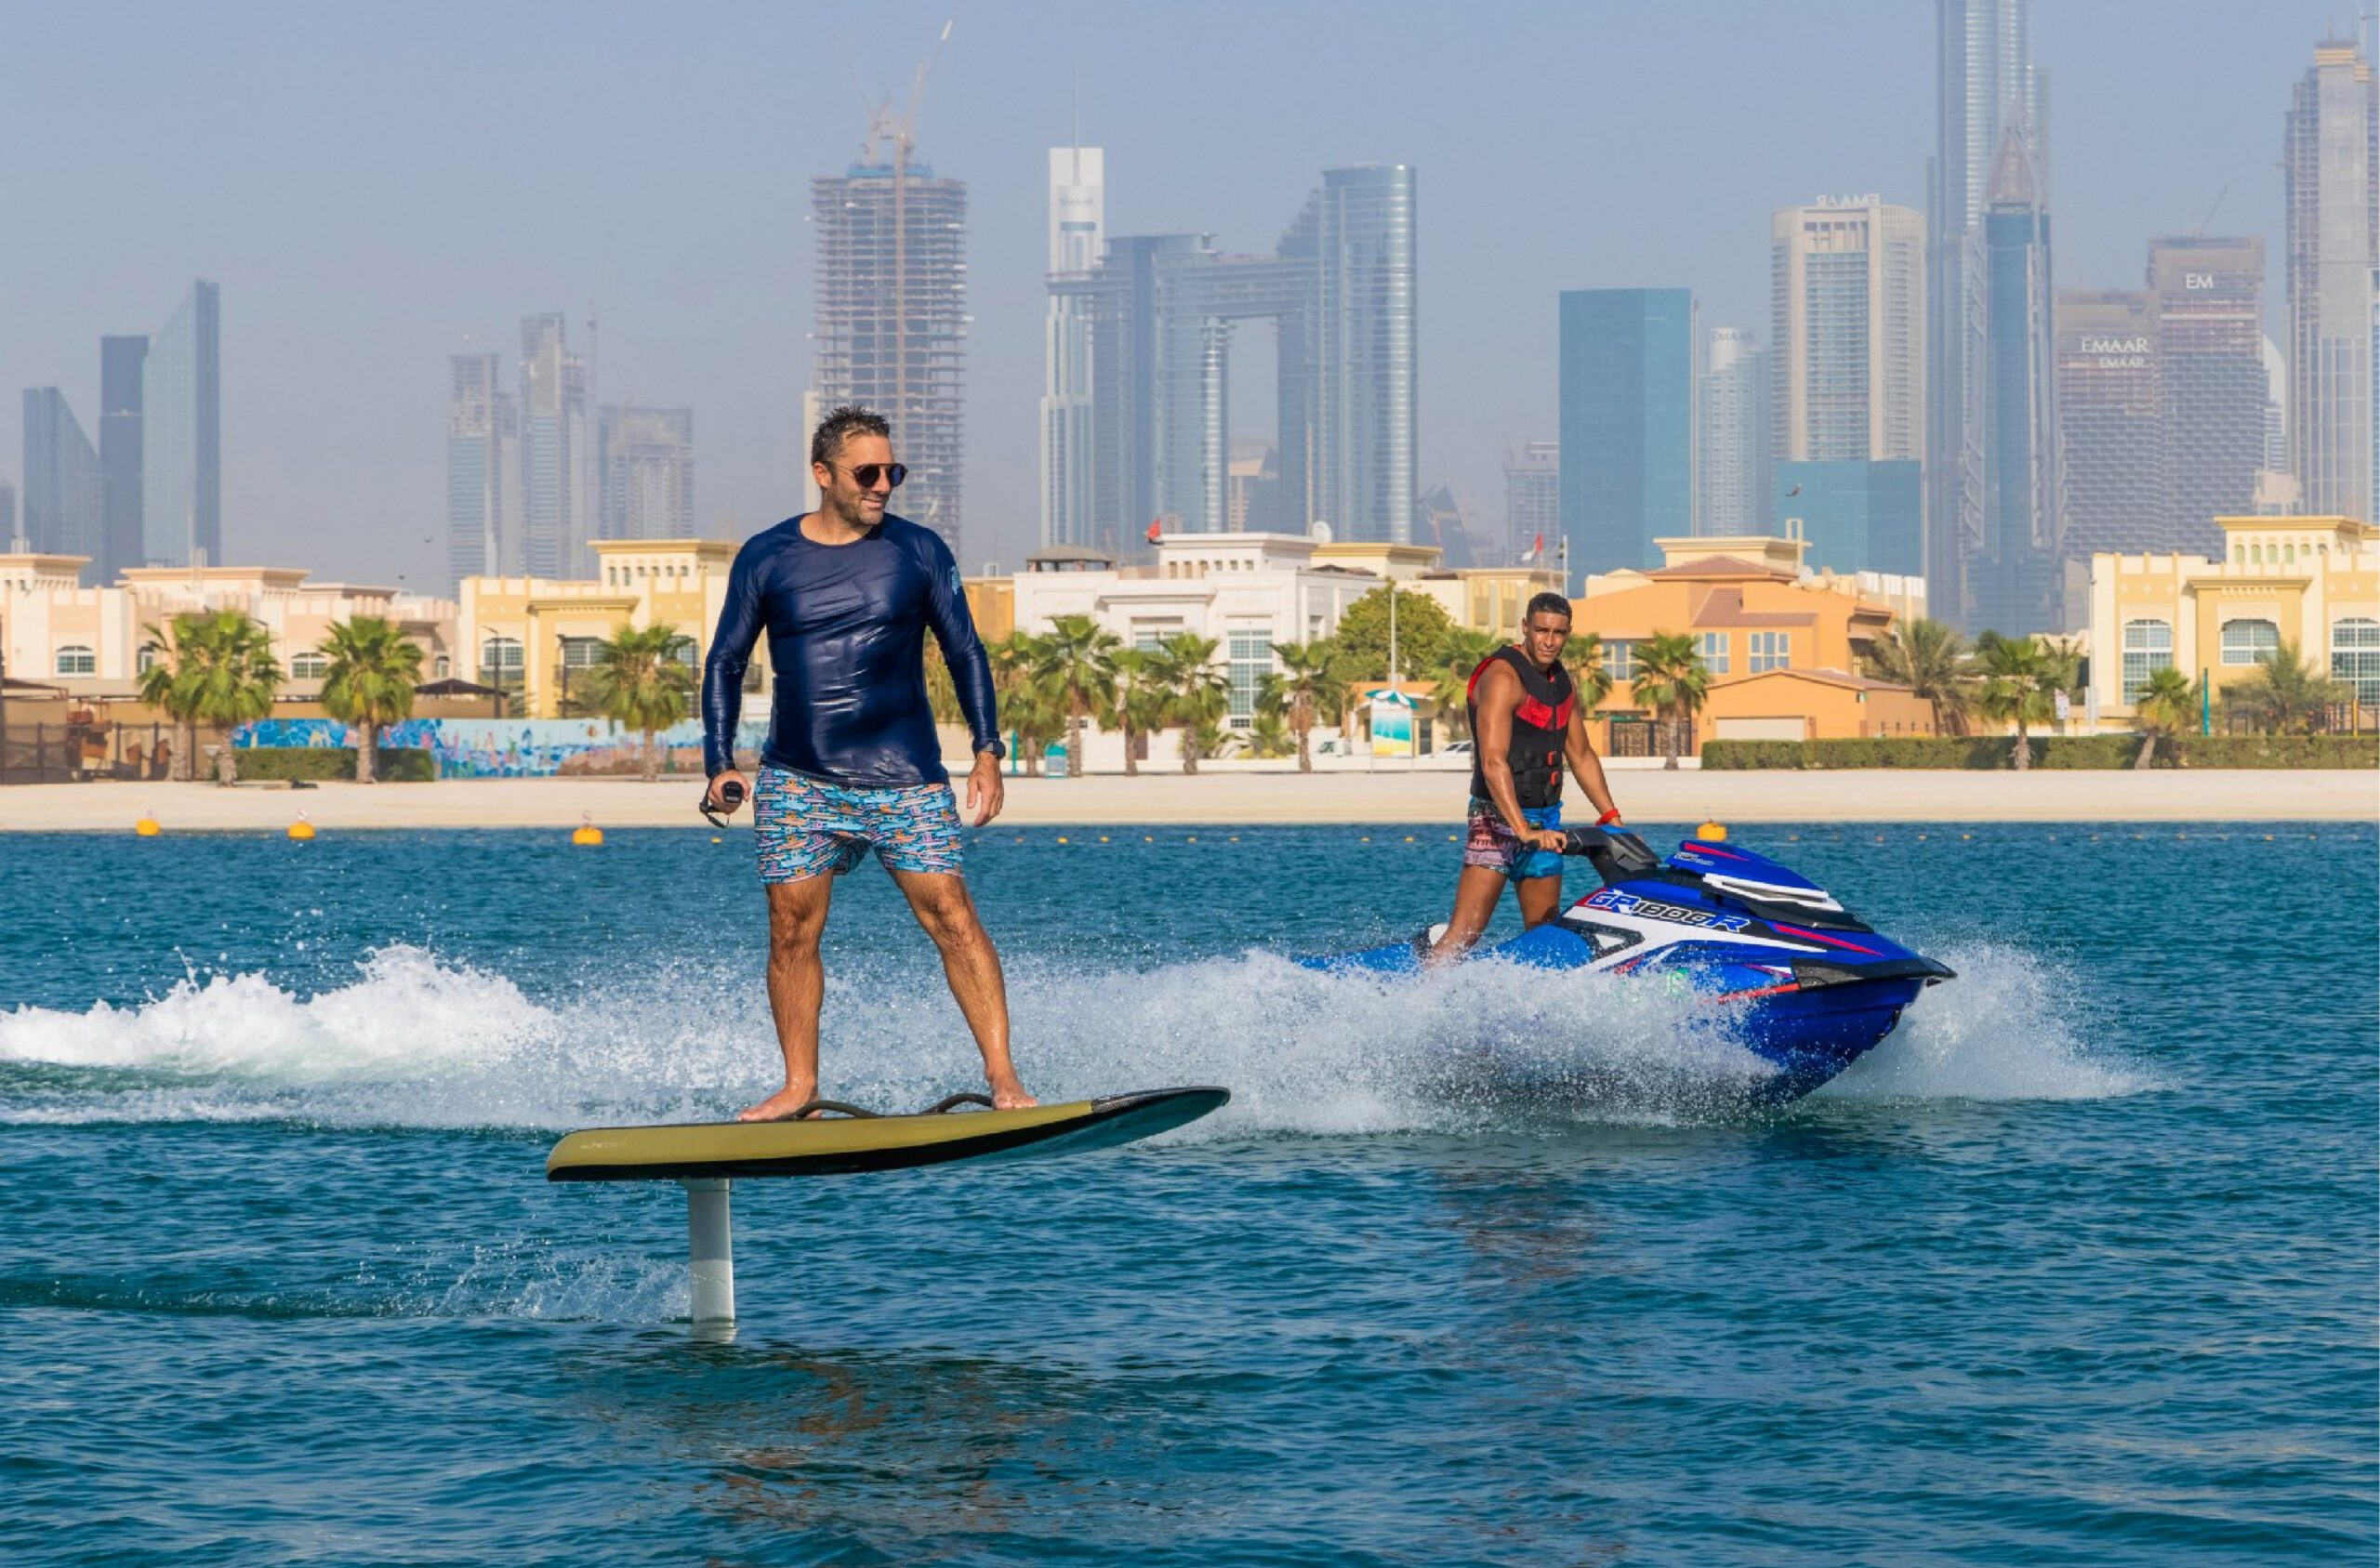 Man enjoying Electronic Surf Board overlooking Dubai skyline